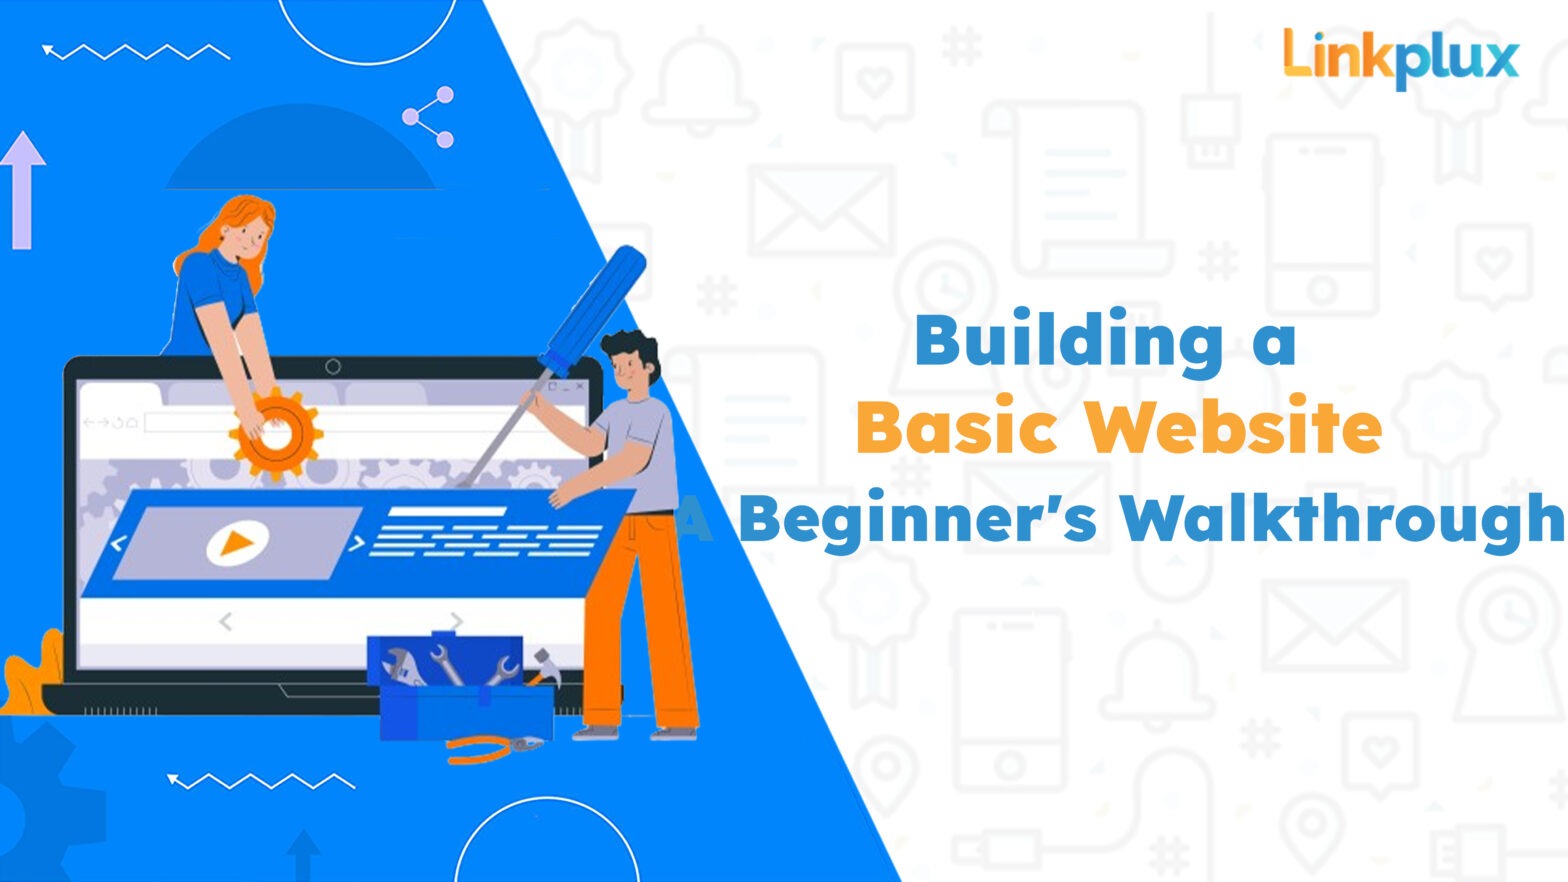 Building a basic website walkthrough